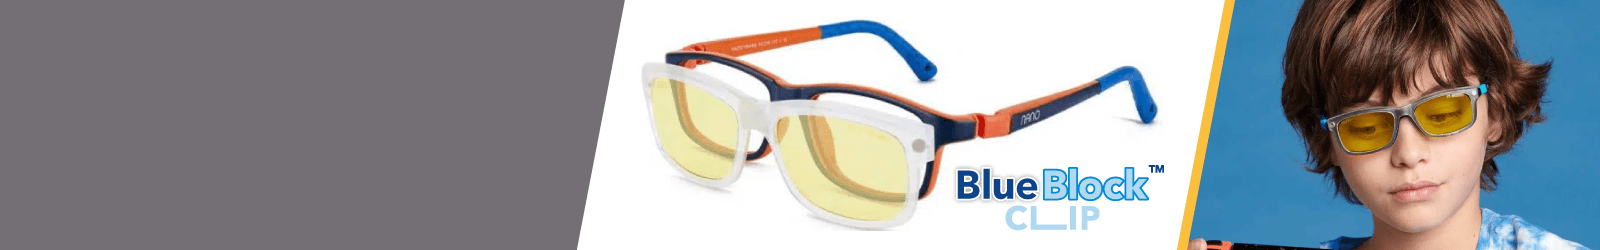 Silver Nano Blue Block Clip Eyewear for Kids